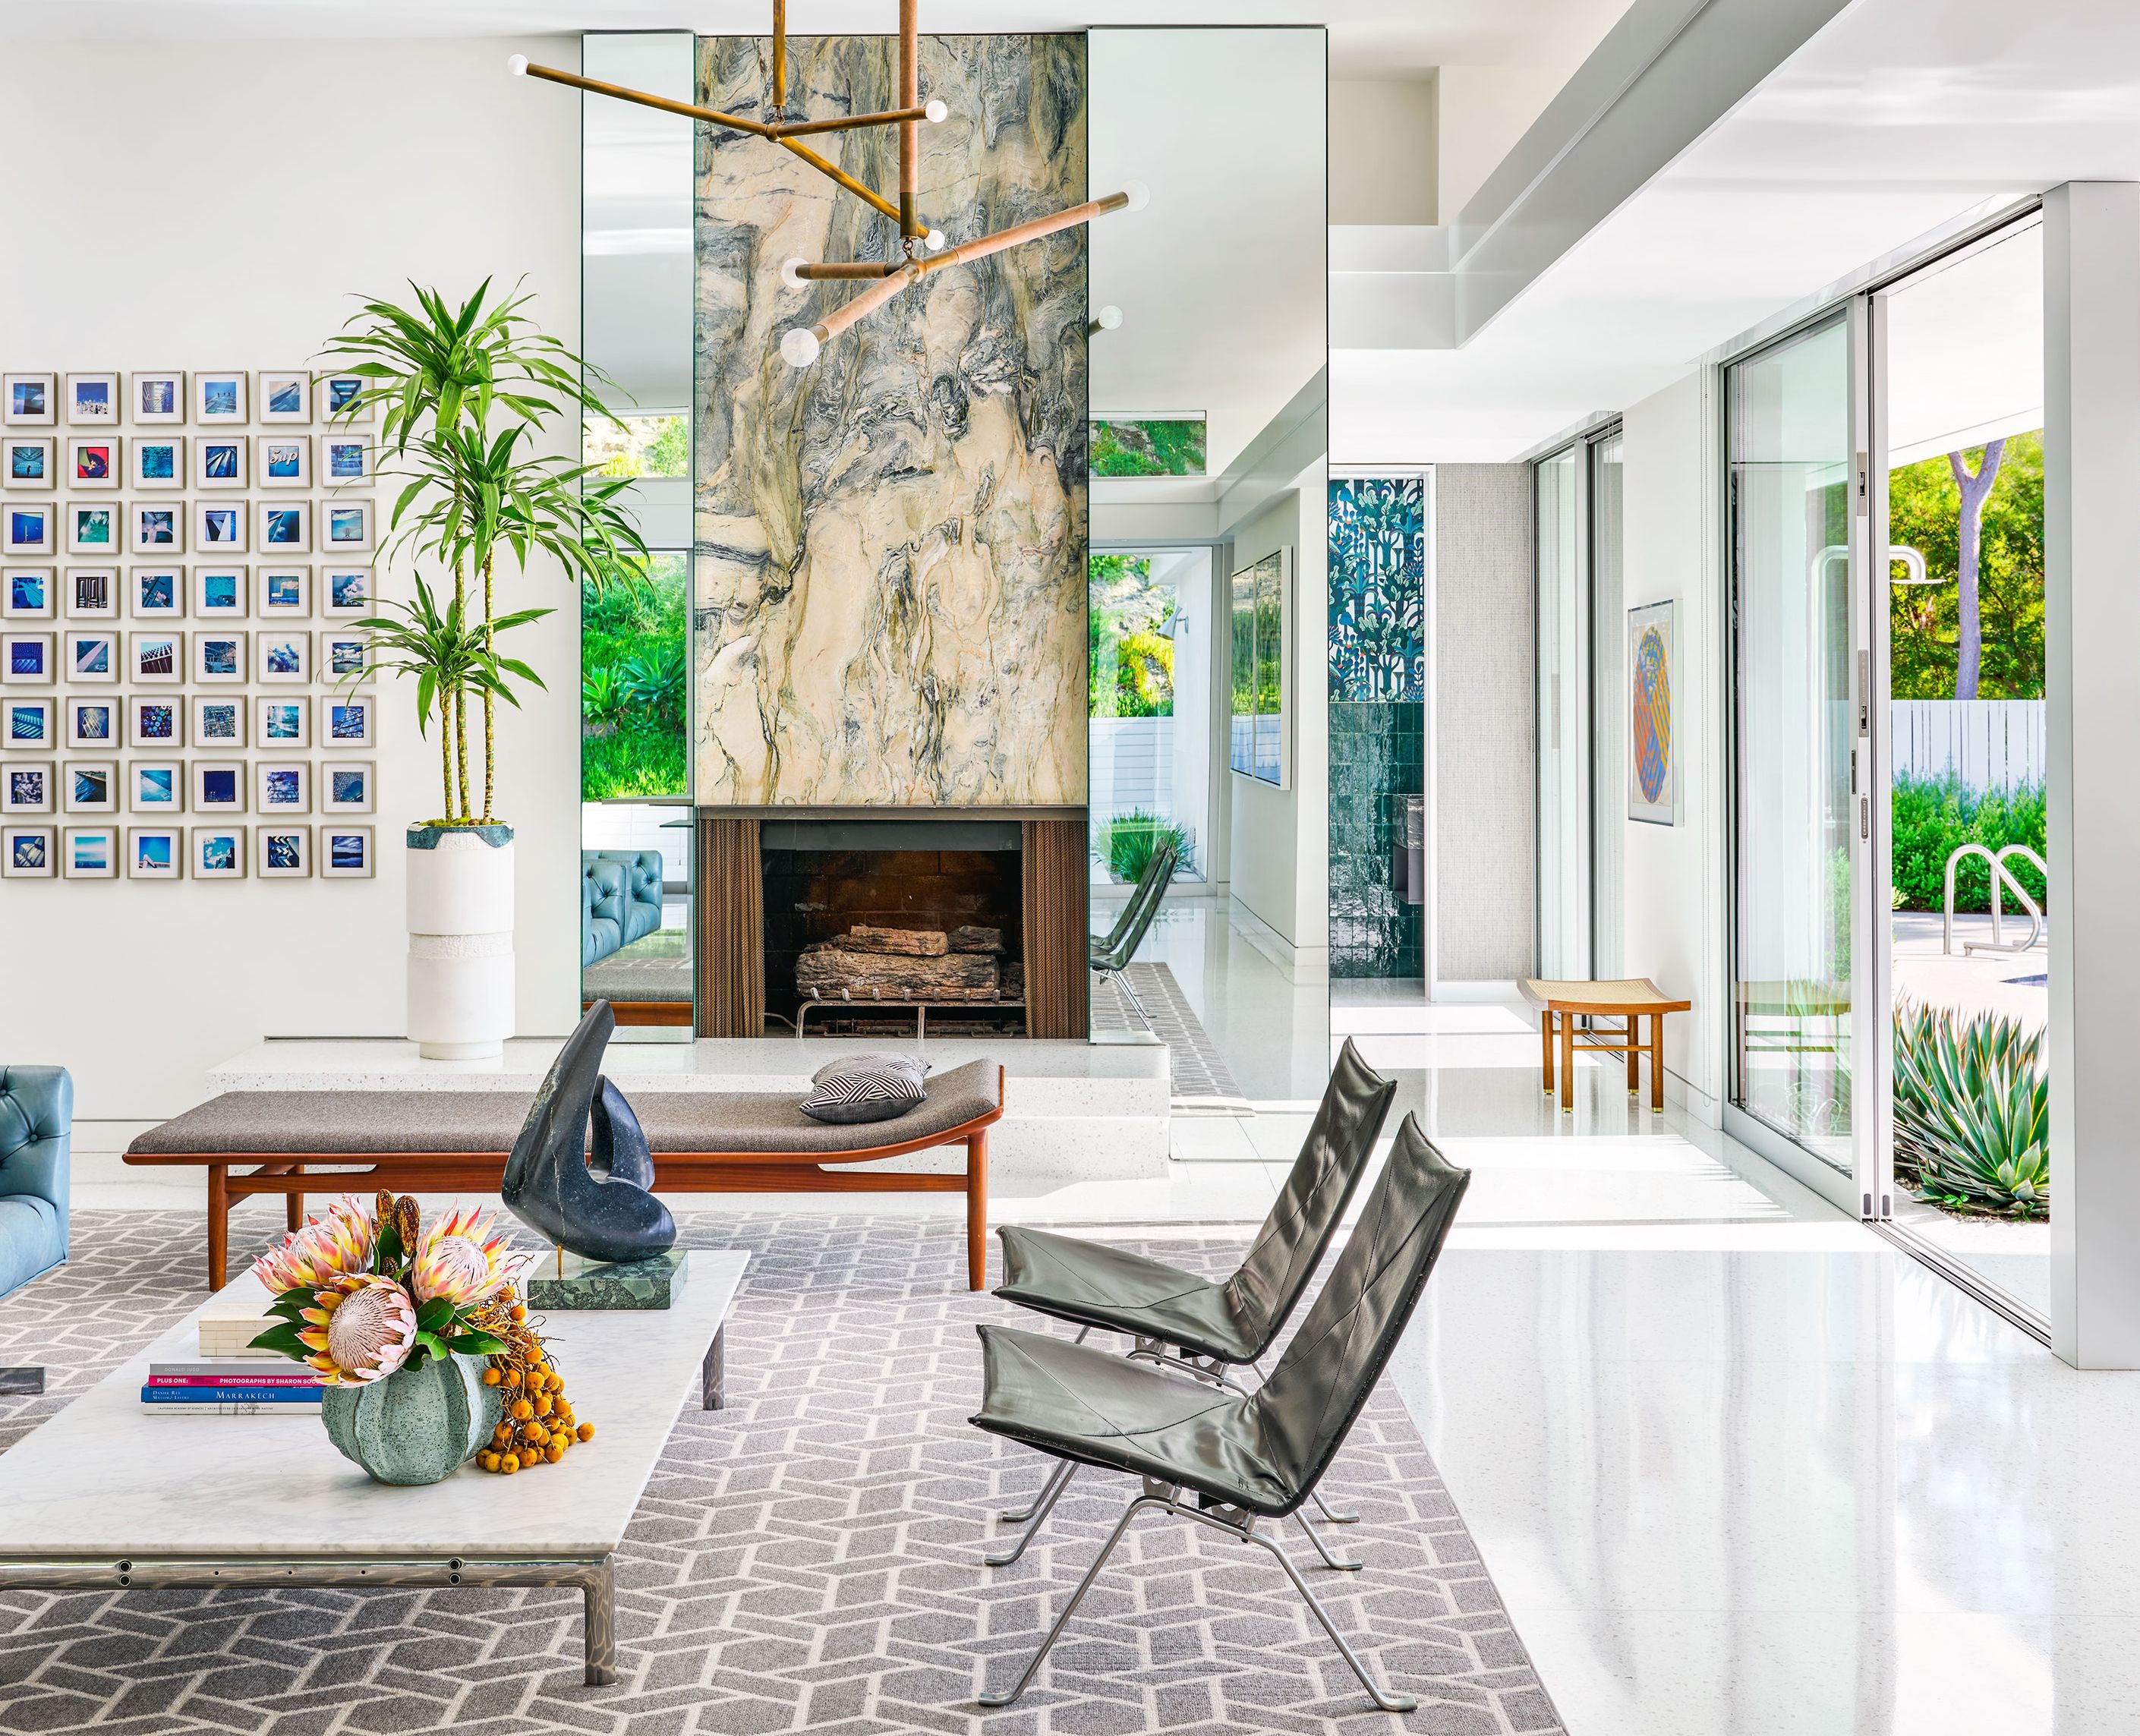 Modern villa interior design ideas 2020 - YouTube